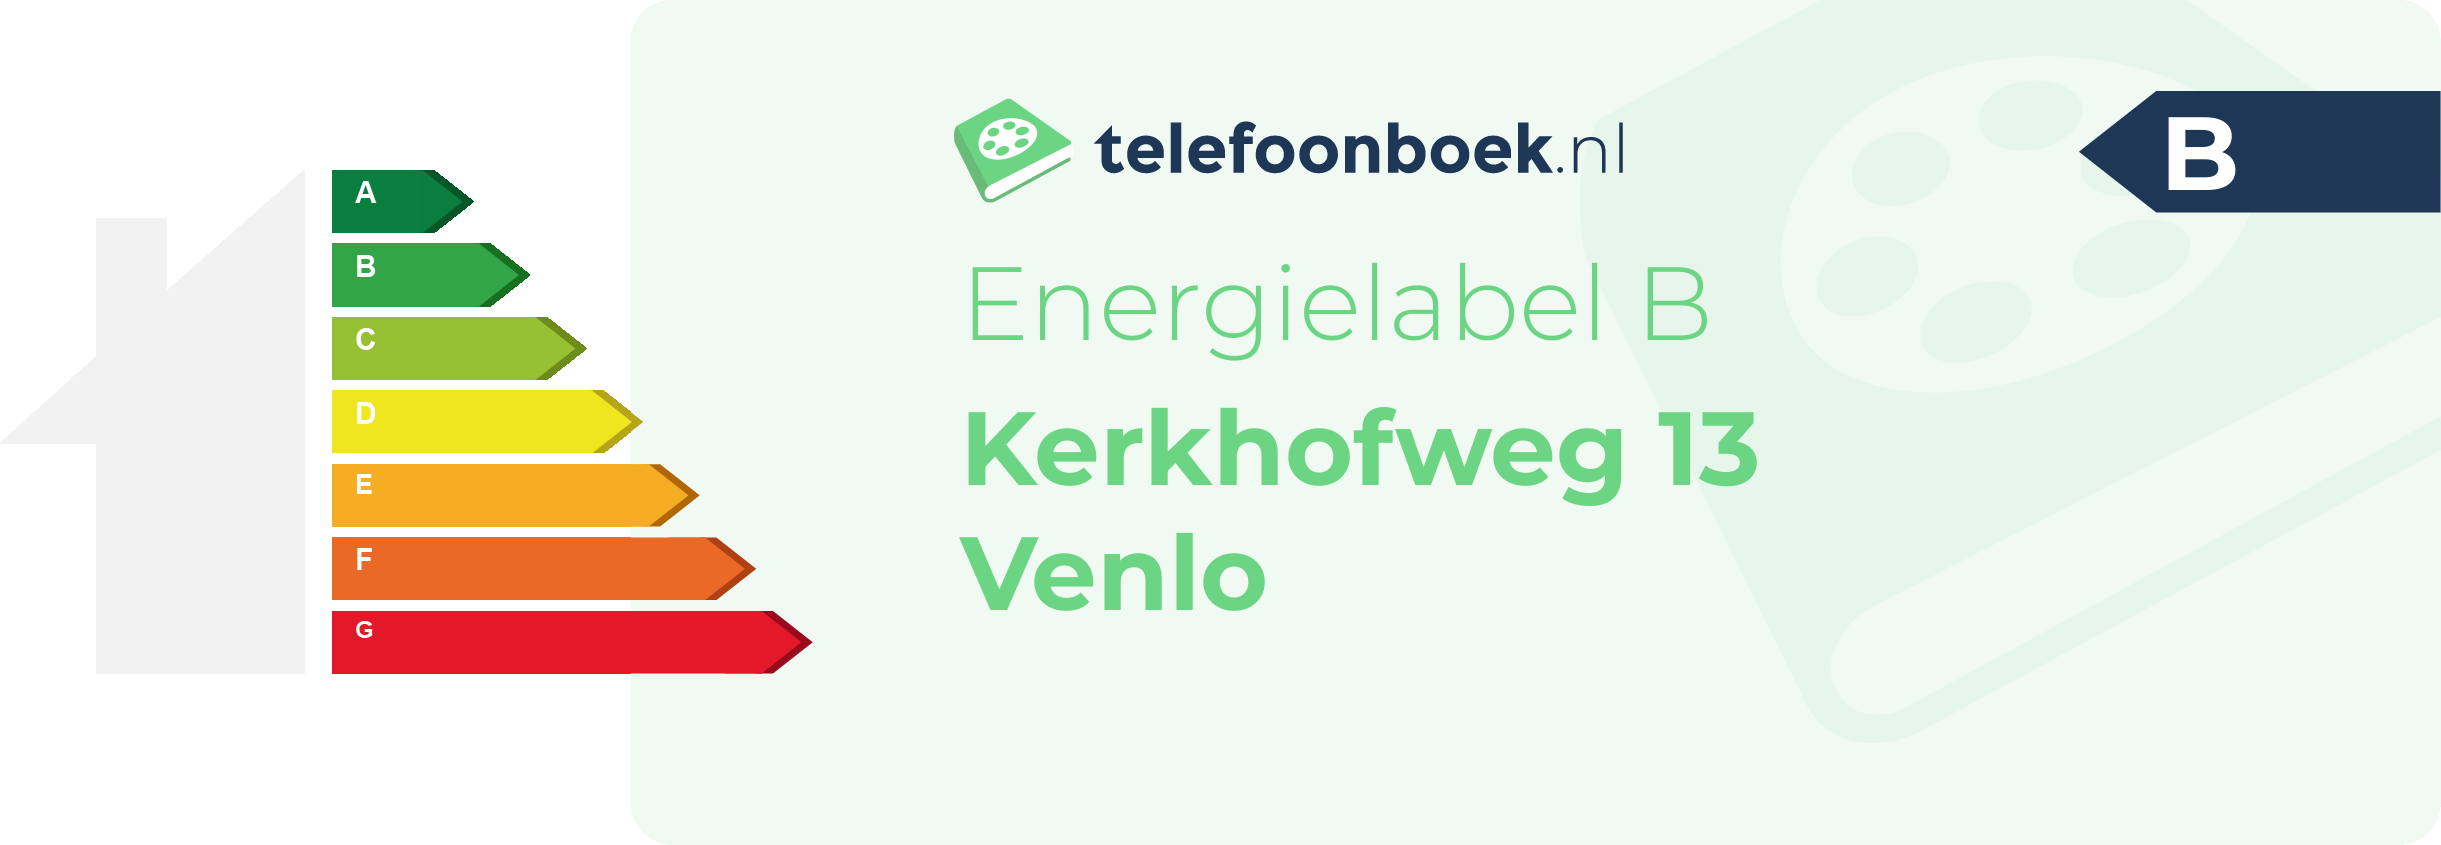 Energielabel Kerkhofweg 13 Venlo